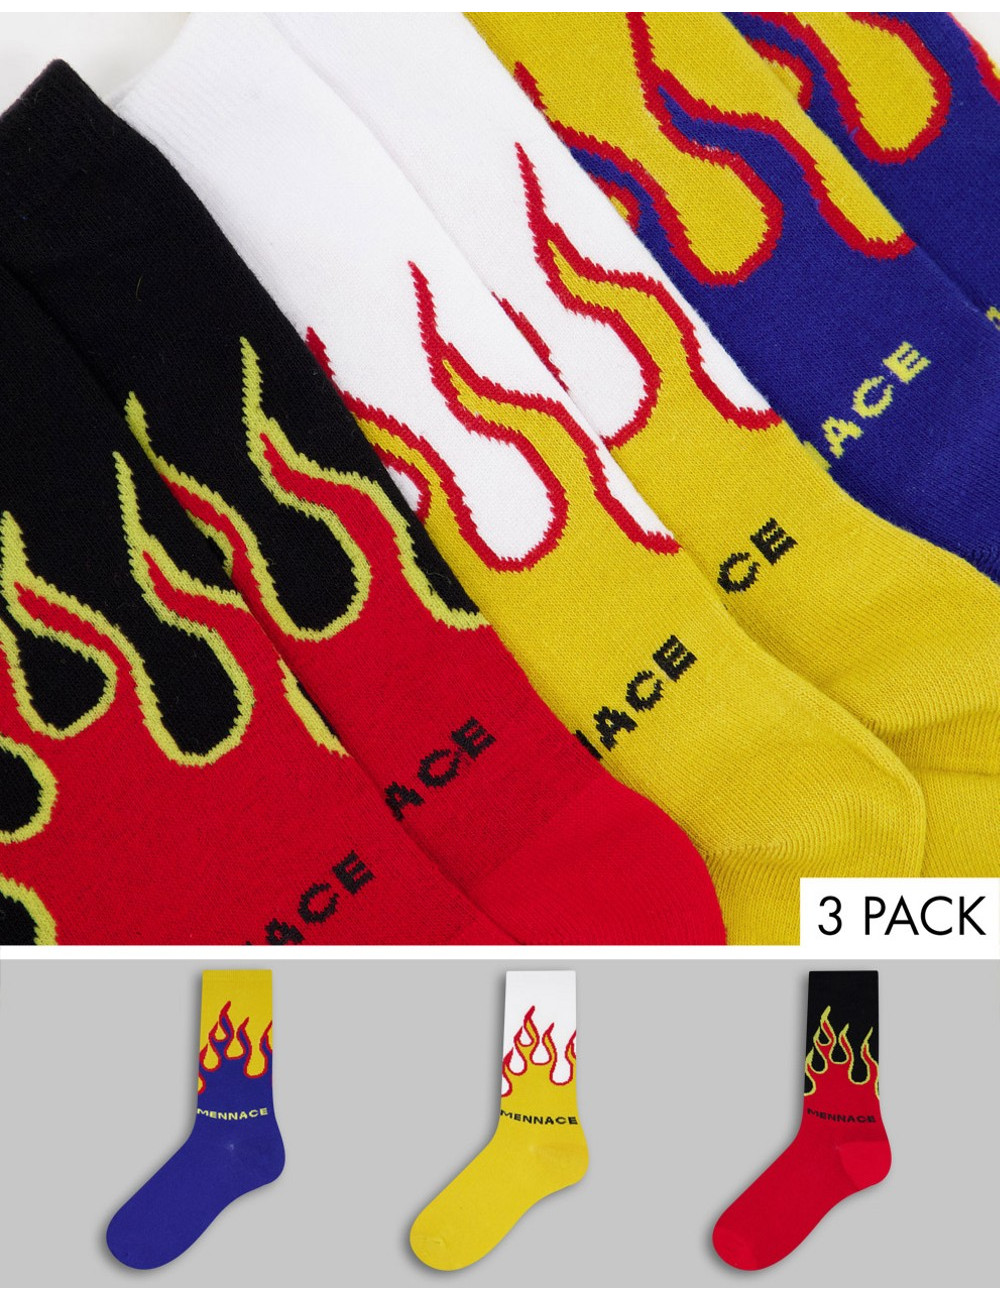 Mennace 3 pack socks with...